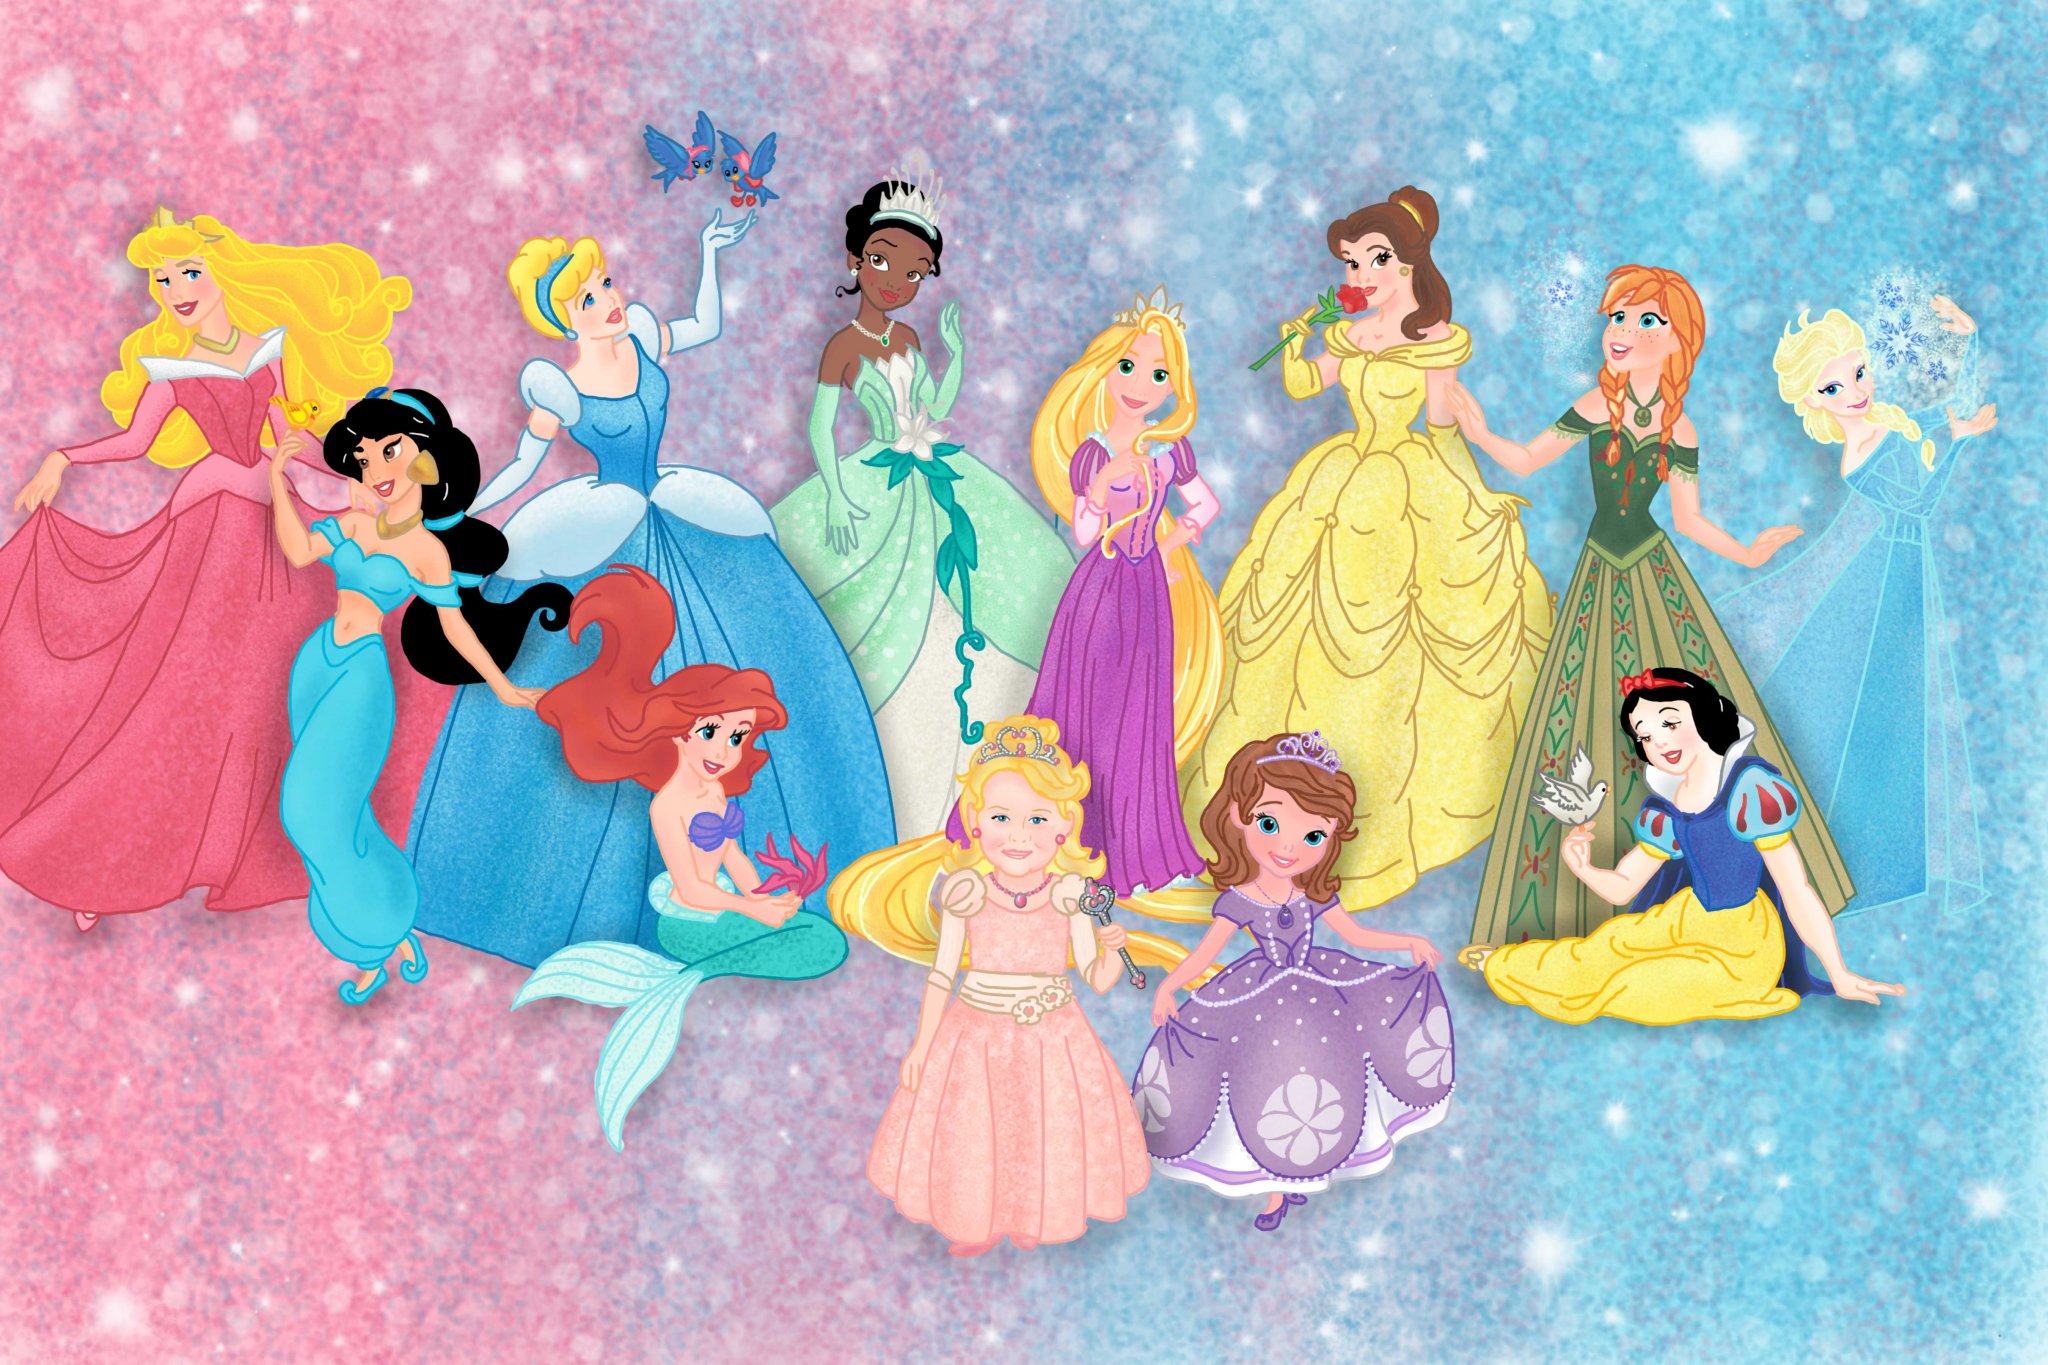 Disney Princess Poster free picture, Disney Princess Poster free image 